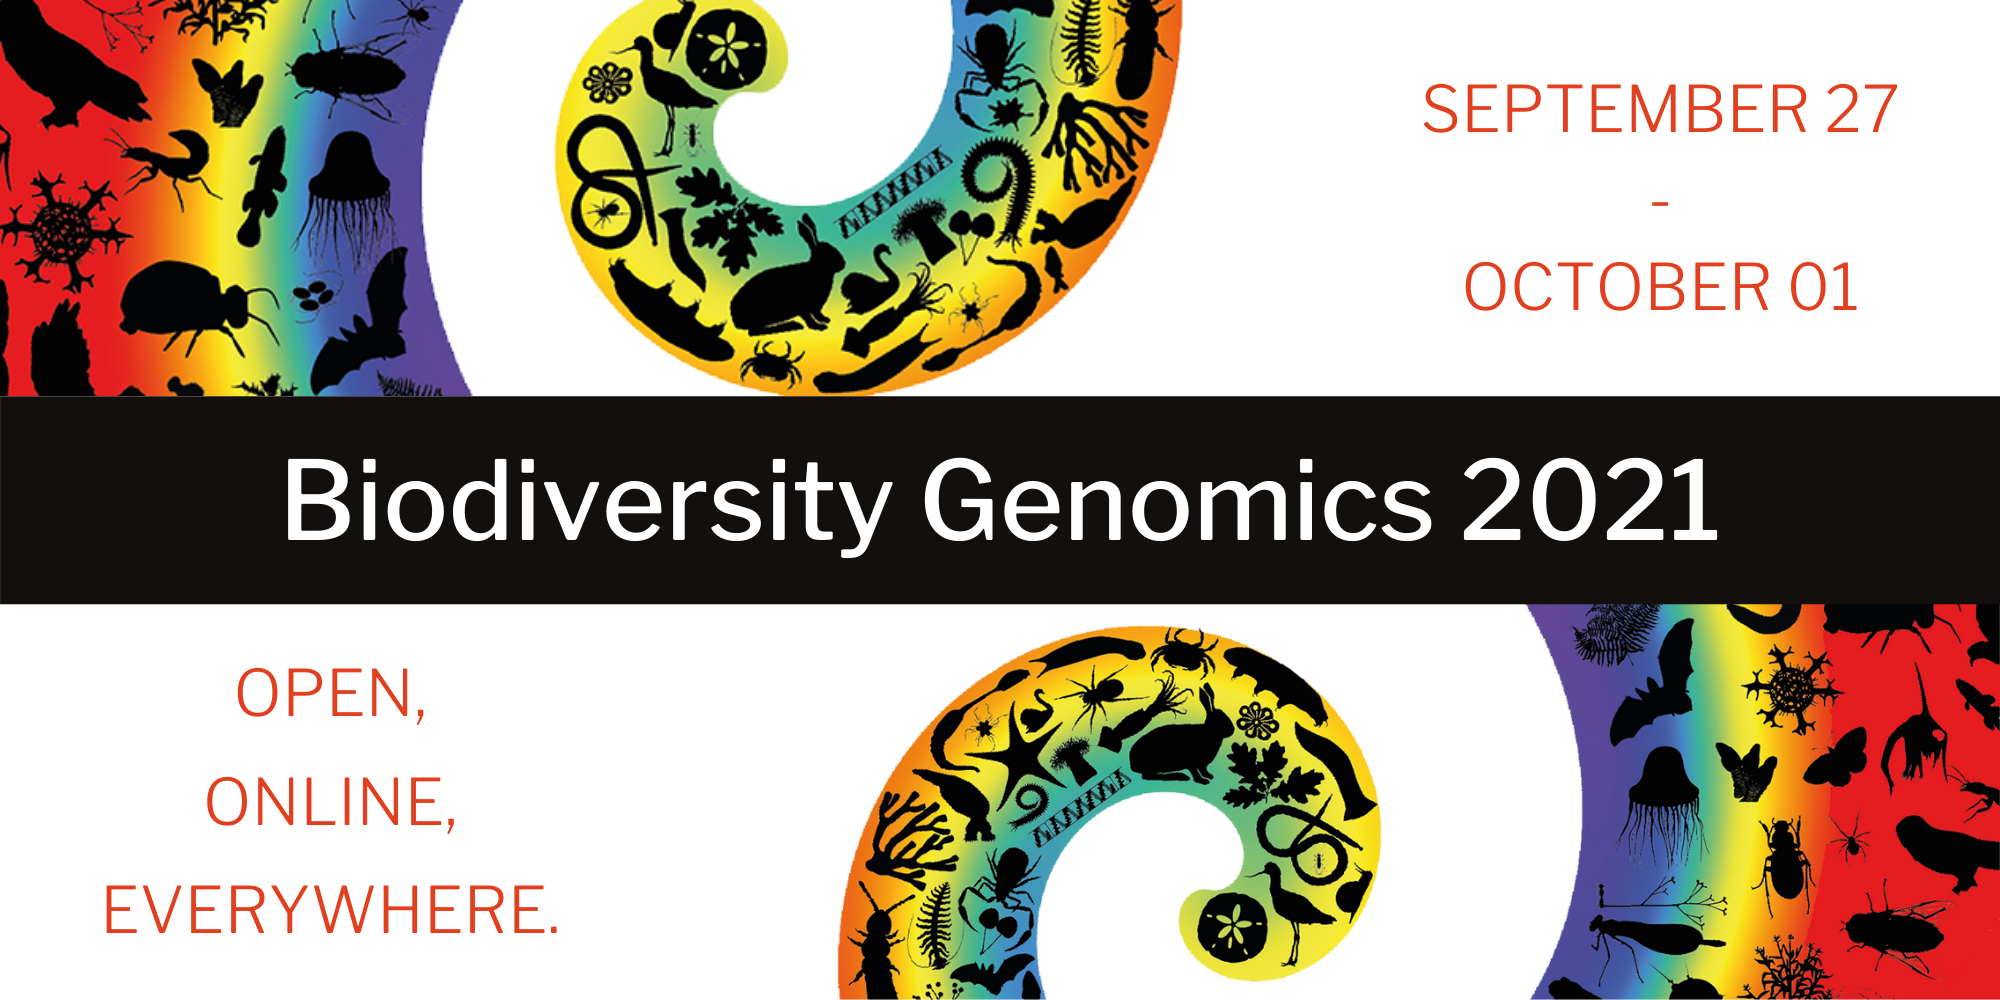 promo card for Biodiversity Genomics 2021 event